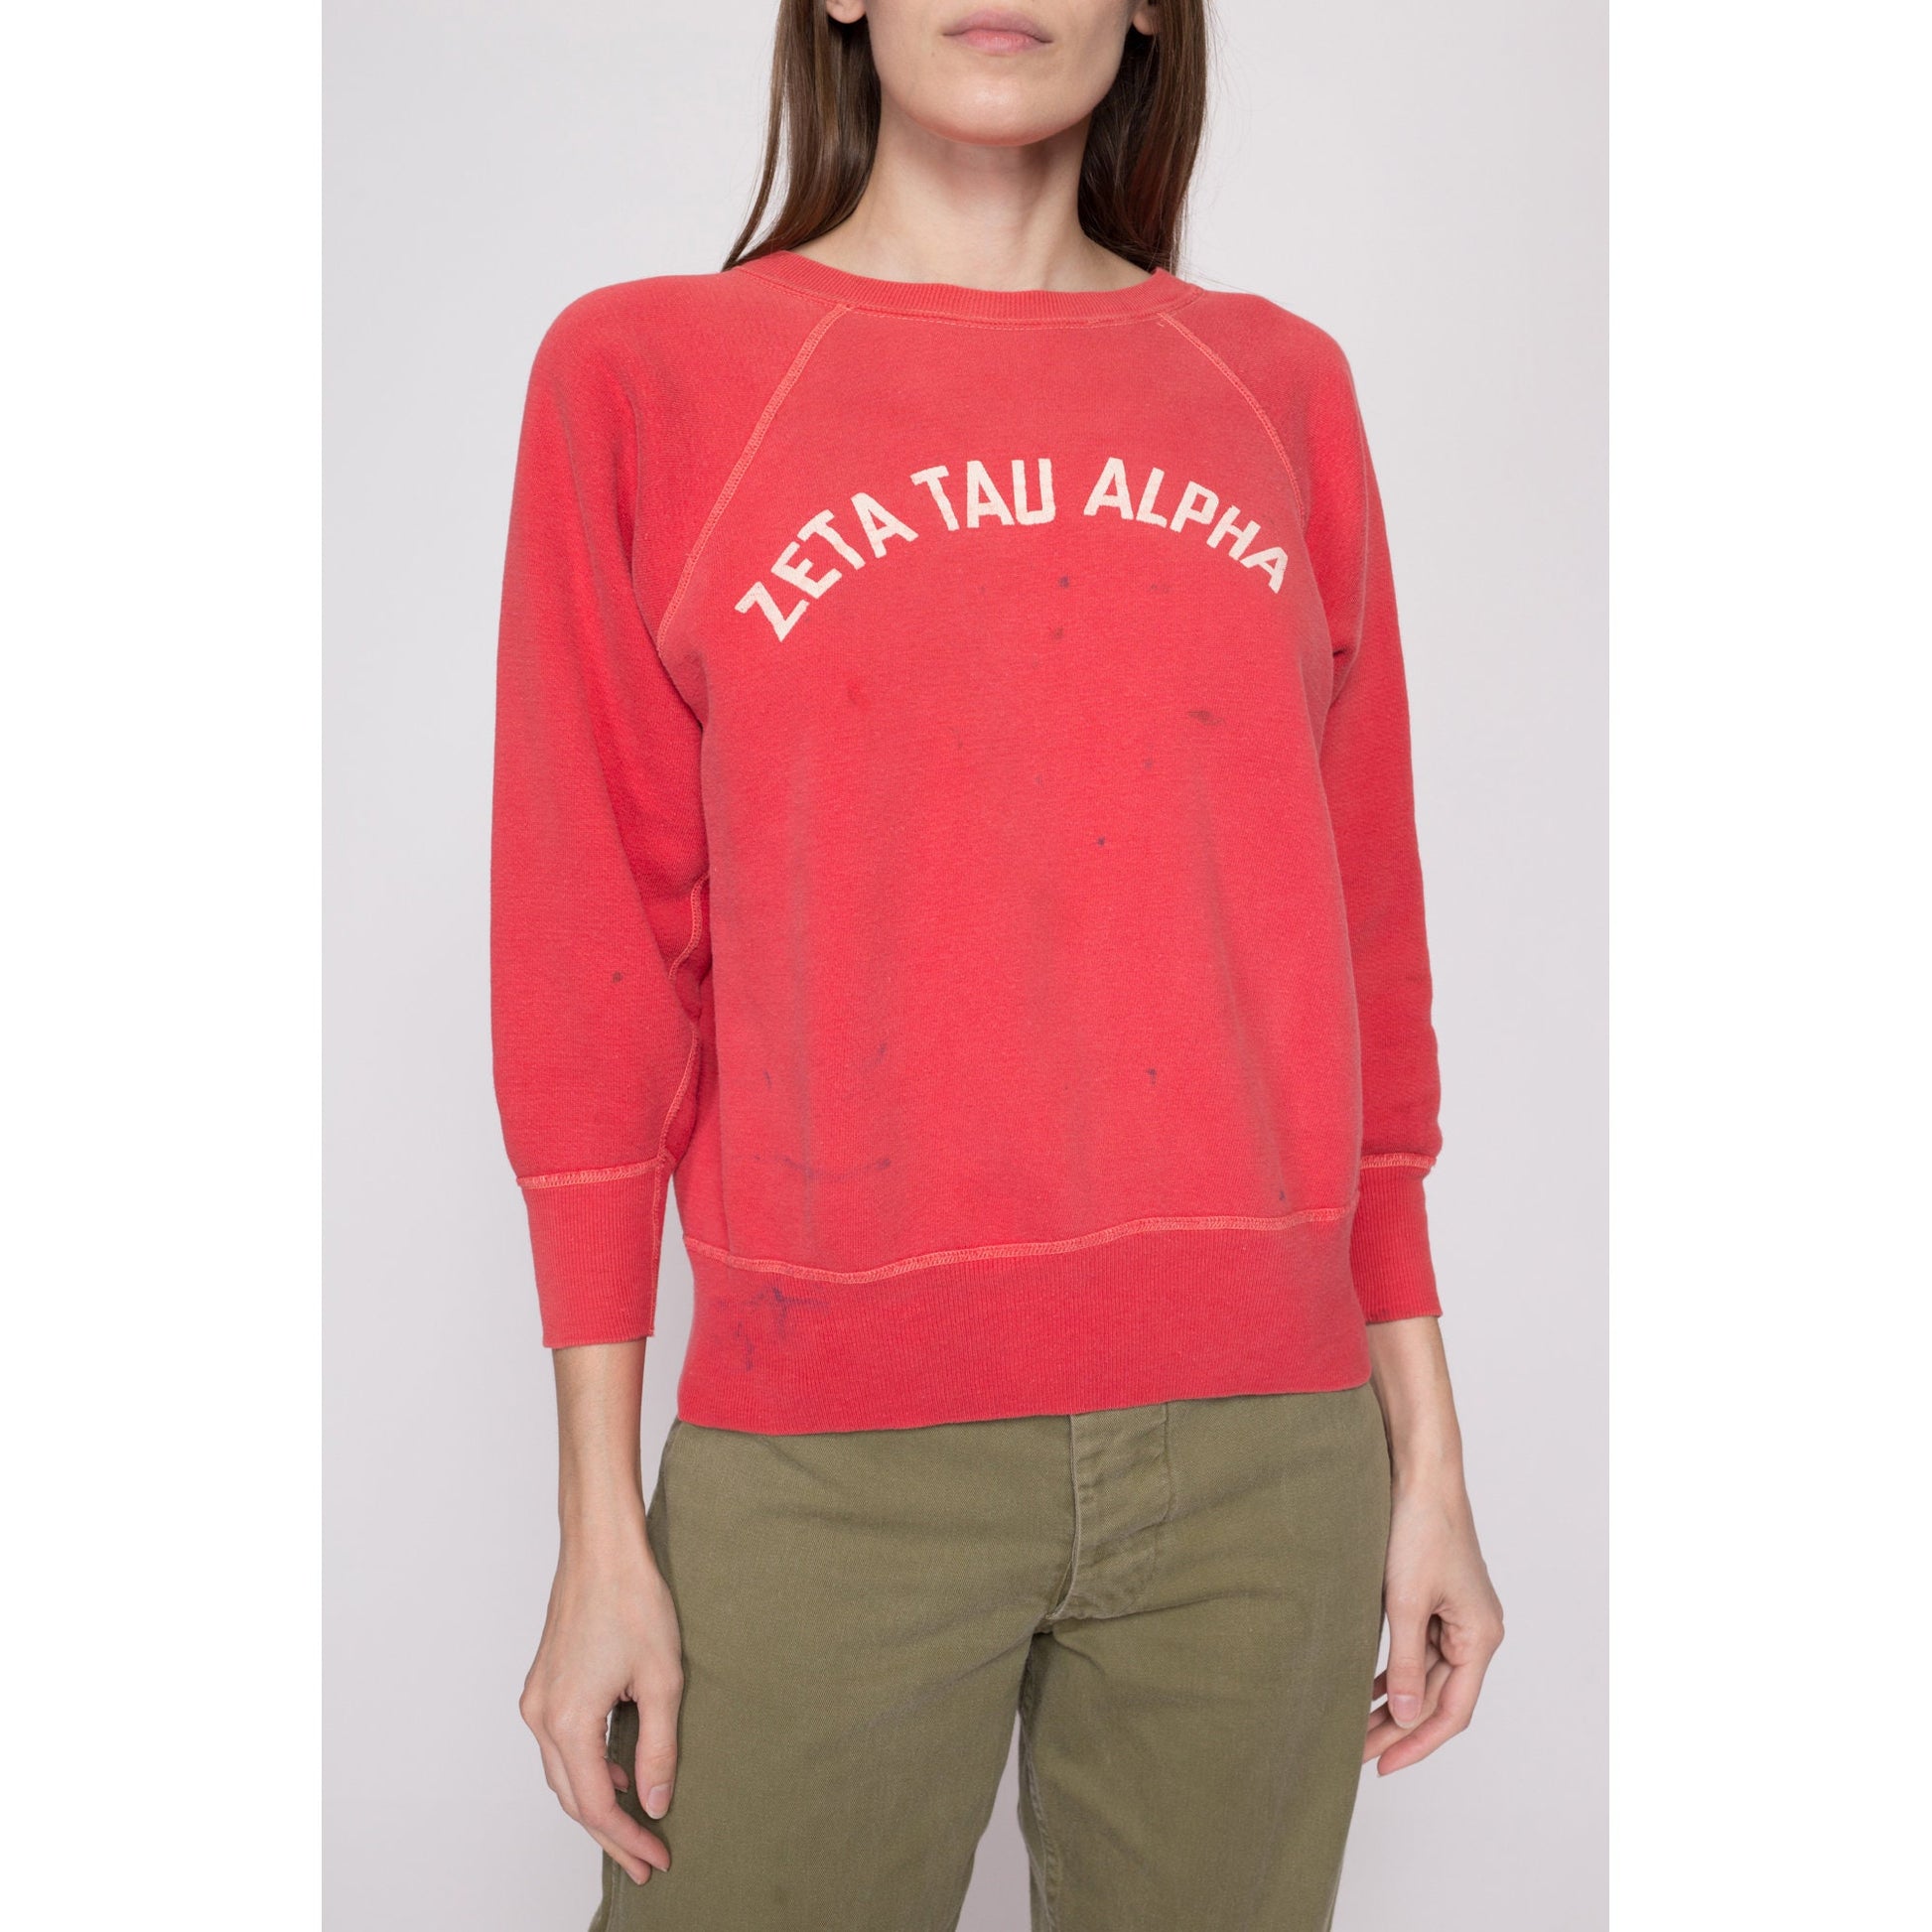 S| 1960s Zeta Tau Alpha Sorority Sweatshirt - Petite Small | Vintage 60s Pink Red Distressed Raglan Sleeve College Crewneck